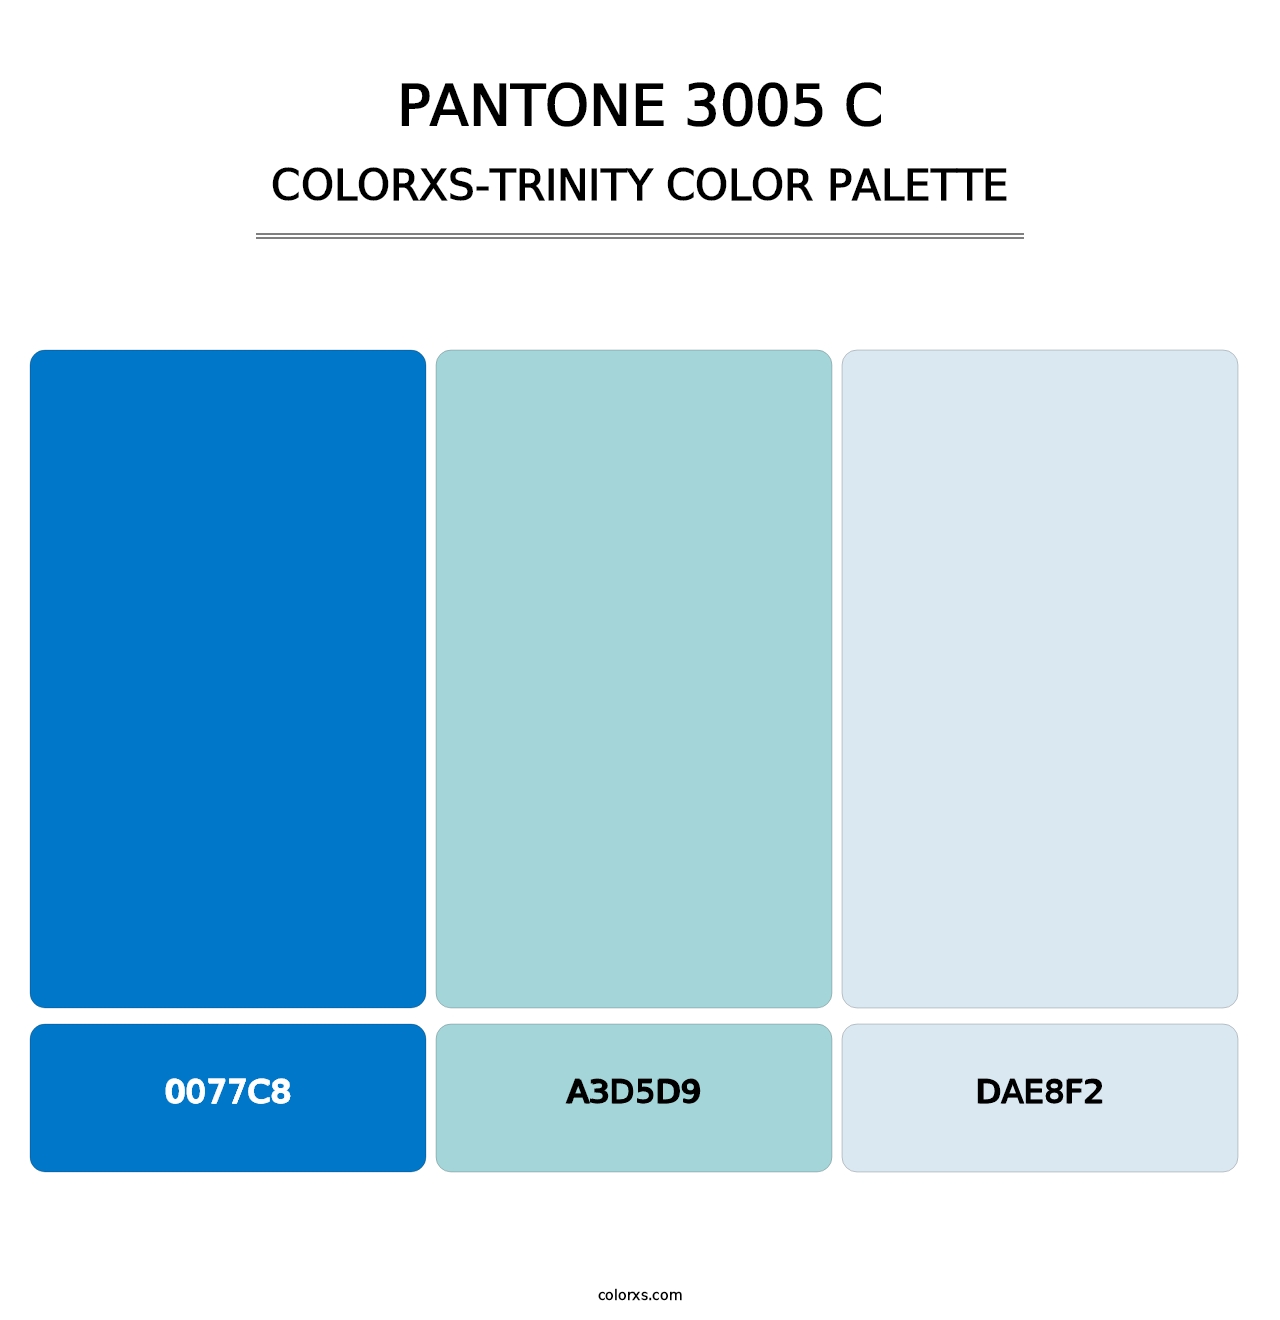 PANTONE 3005 C - Colorxs Trinity Palette